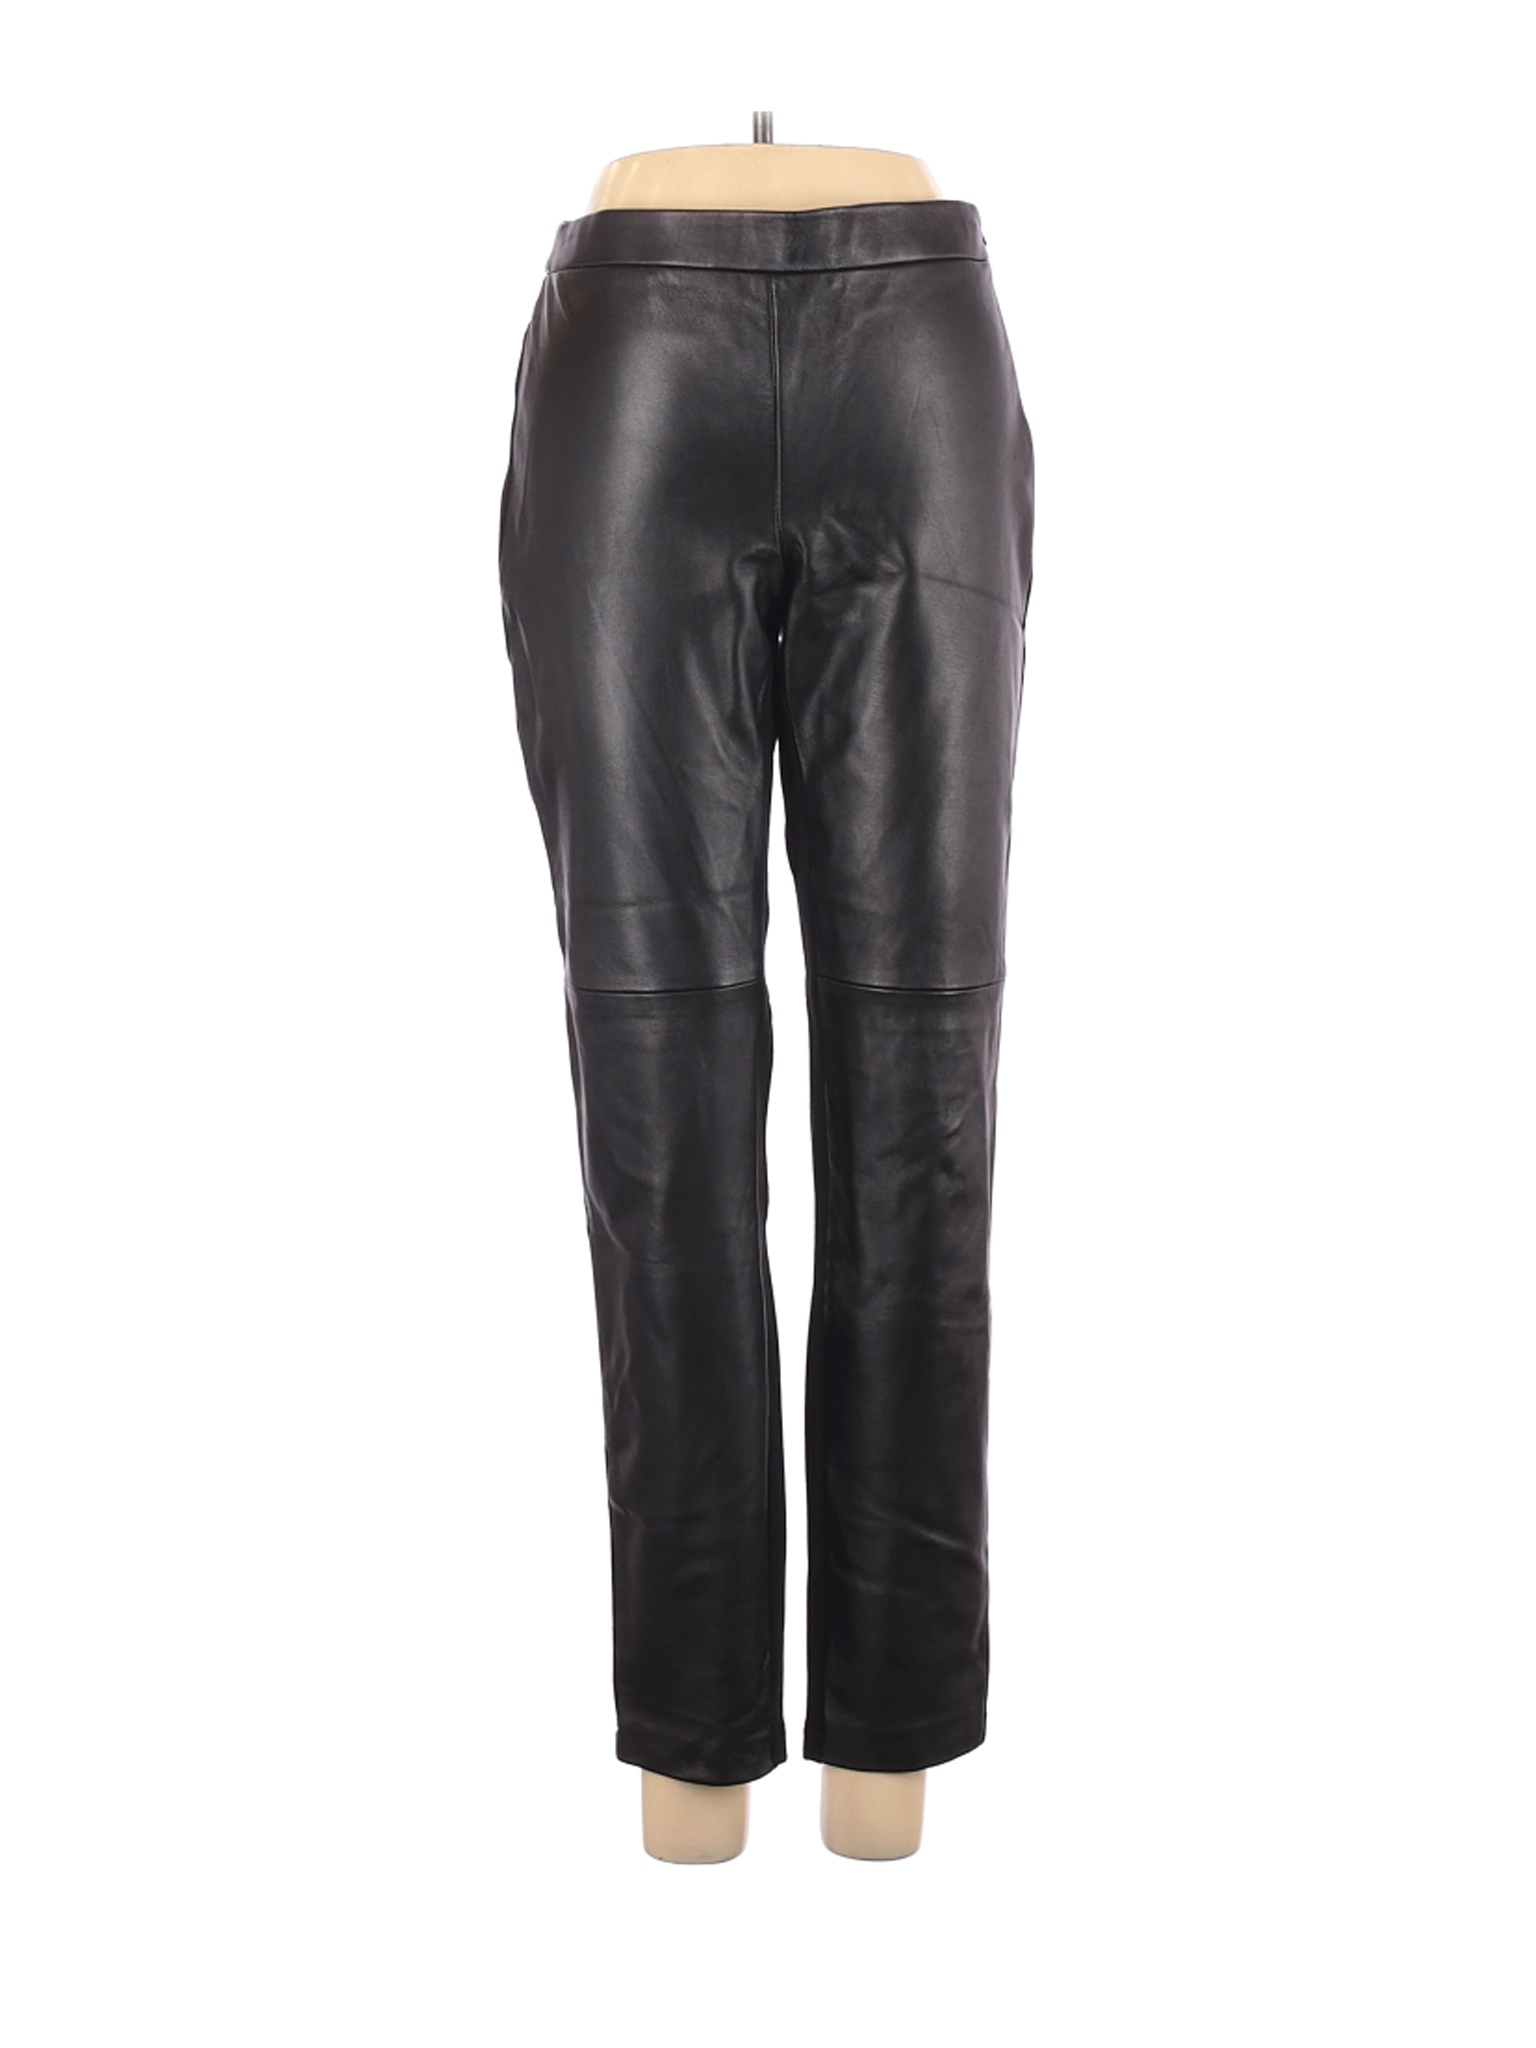 Worth New York Women Black Leather Pants 4 | eBay